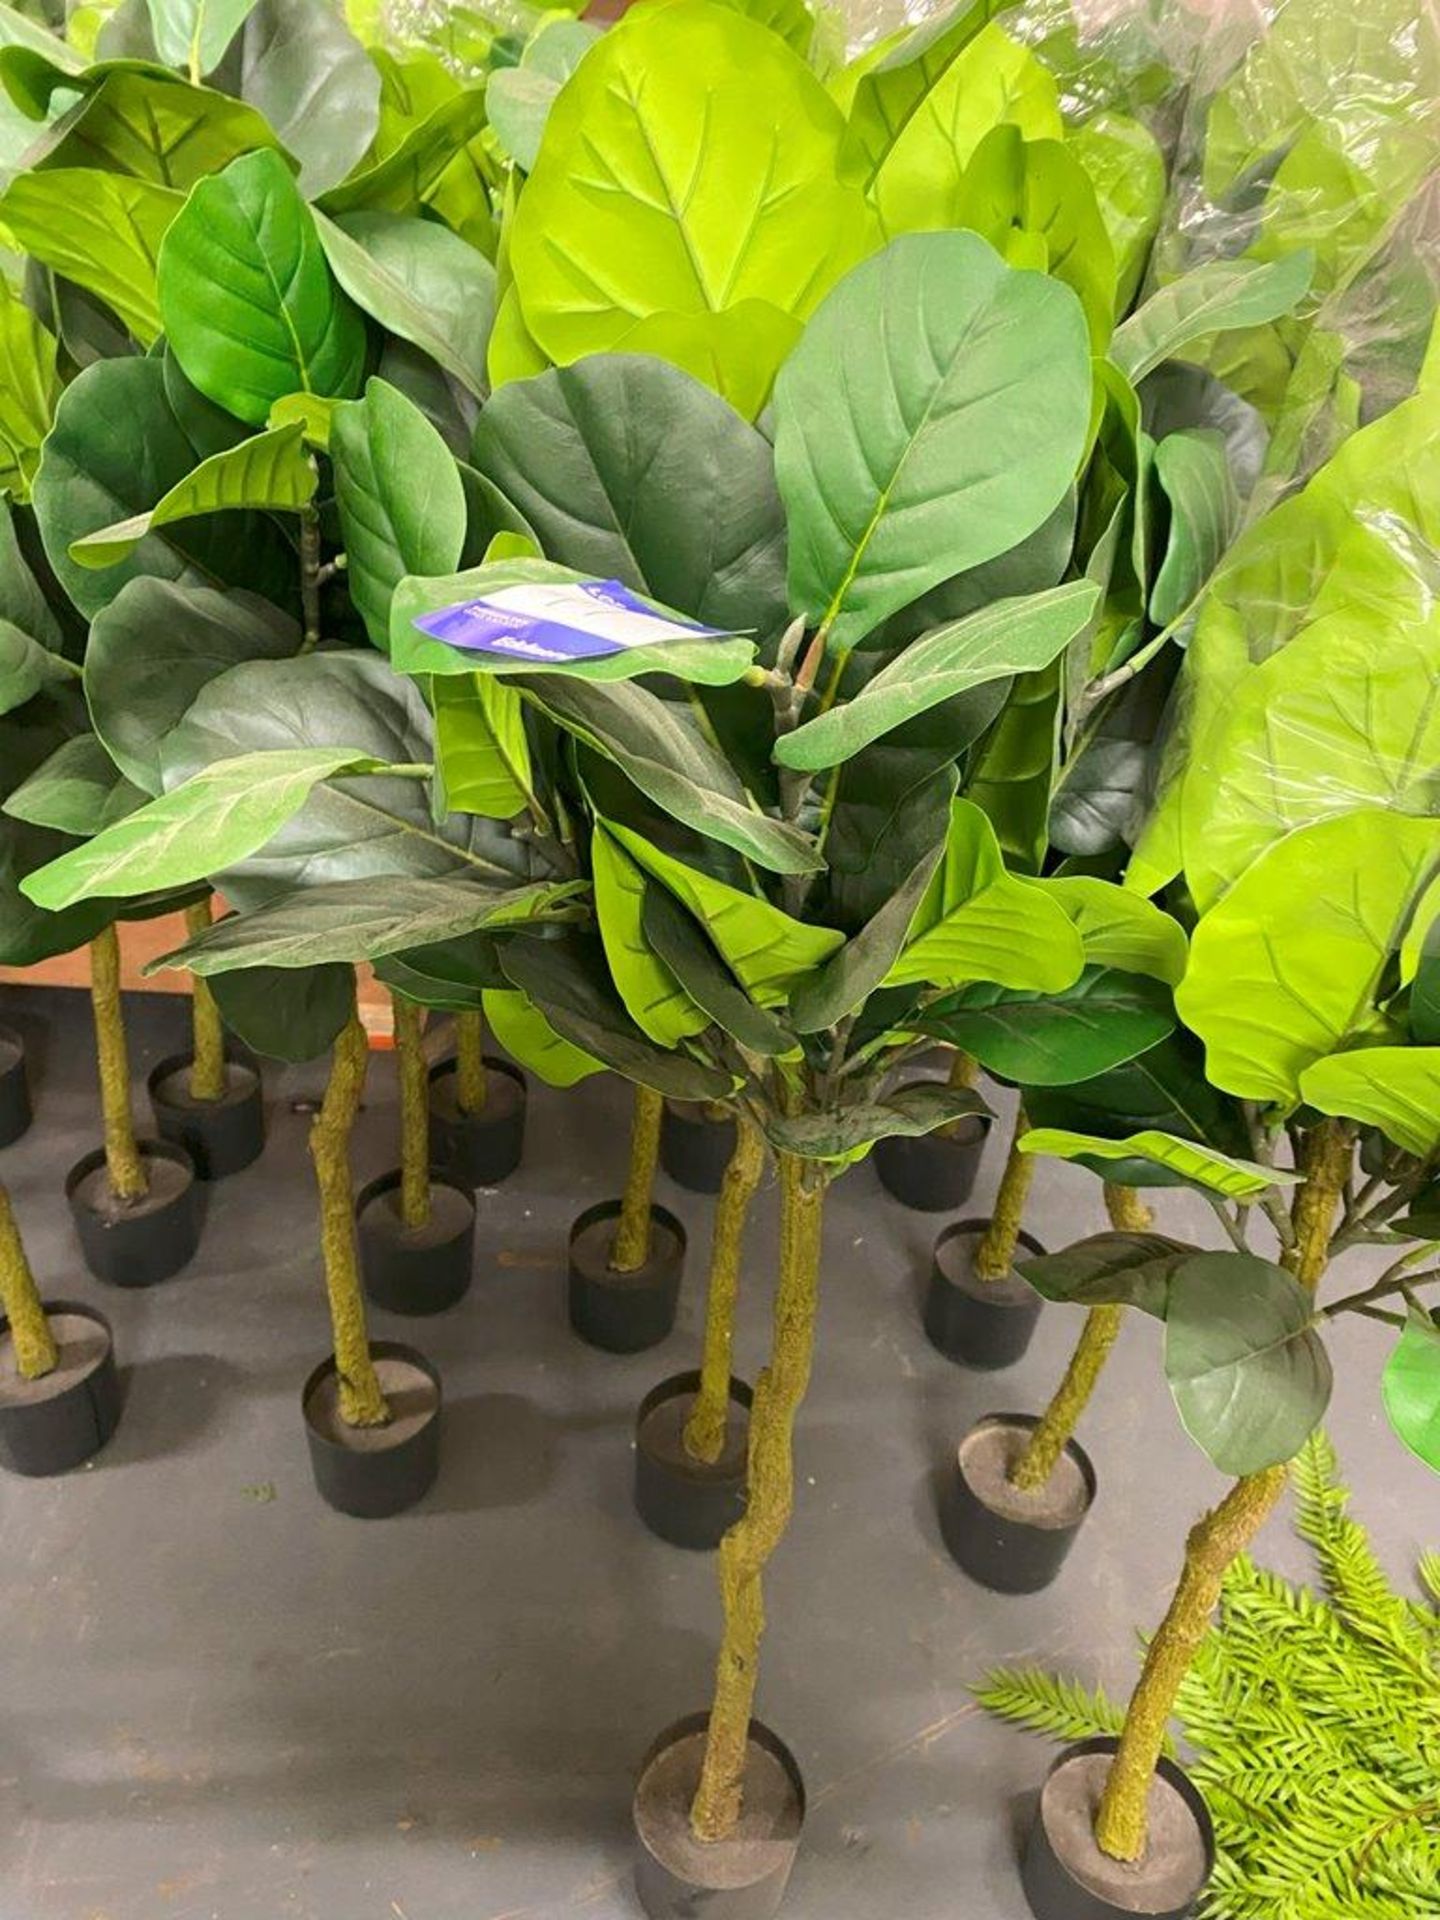 5 x Fig Fiddle Leaf Artificial Plants